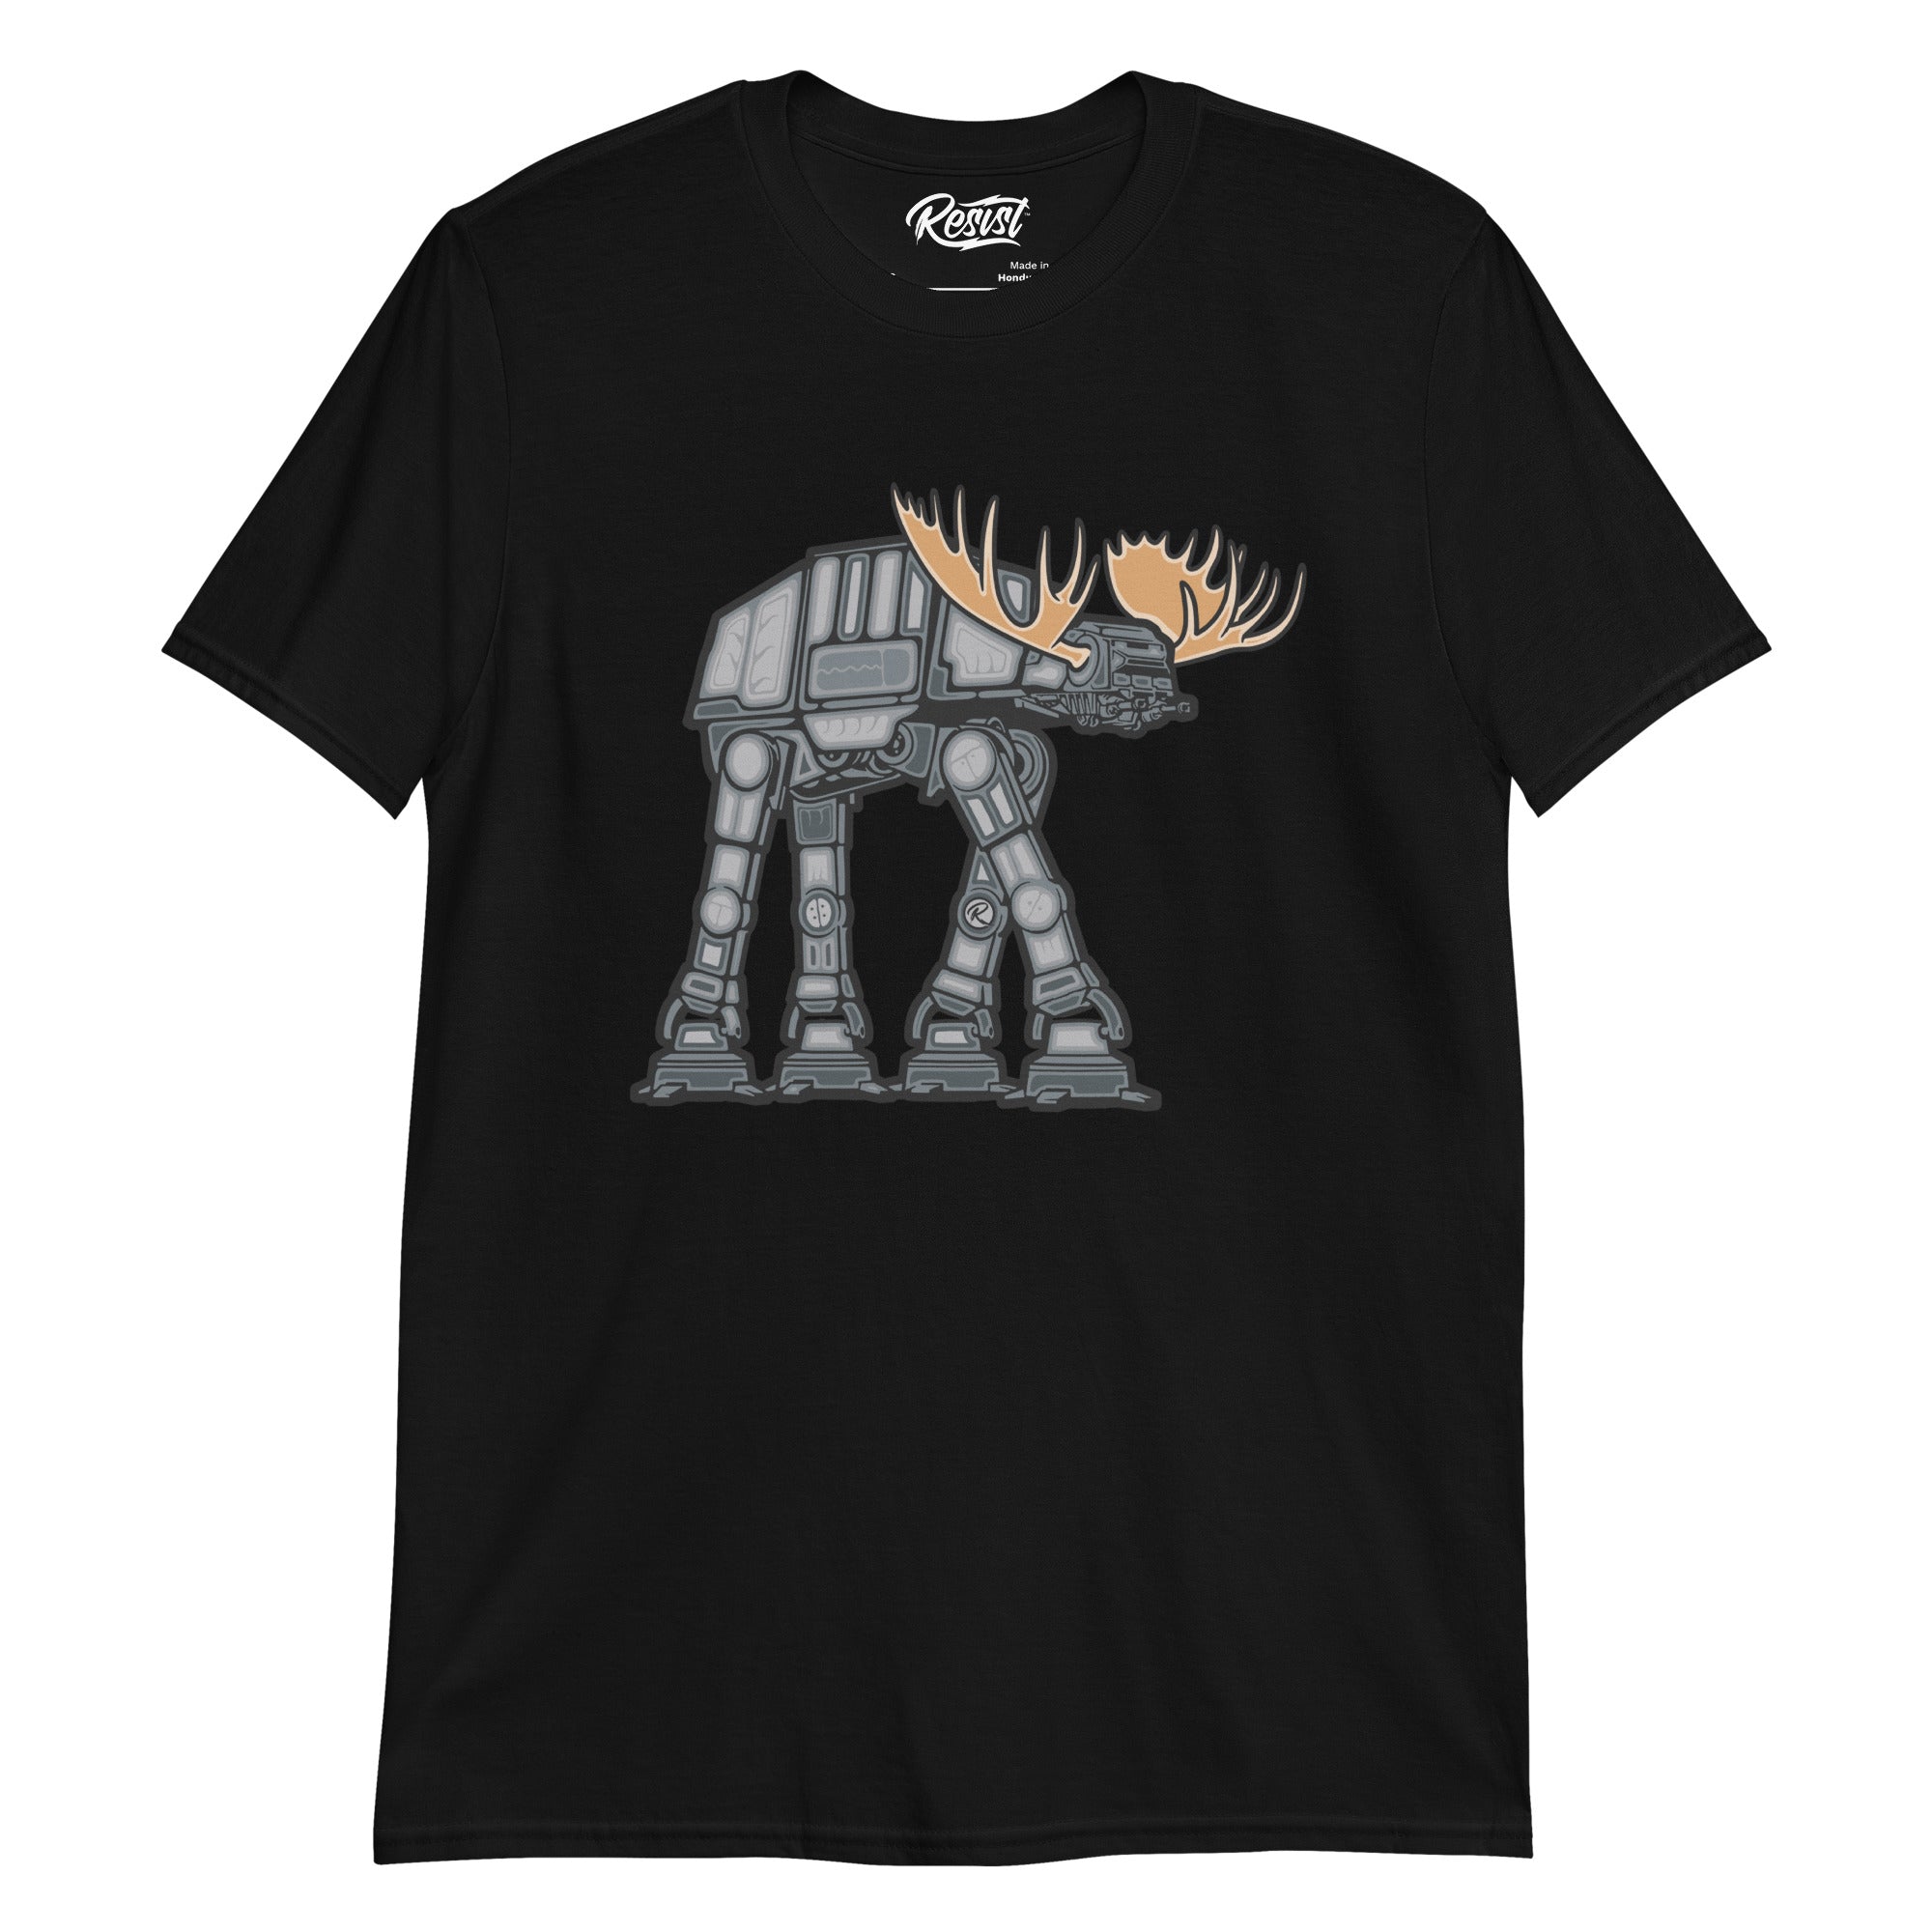 The Big Metal Moose T-Shirt (unisex)